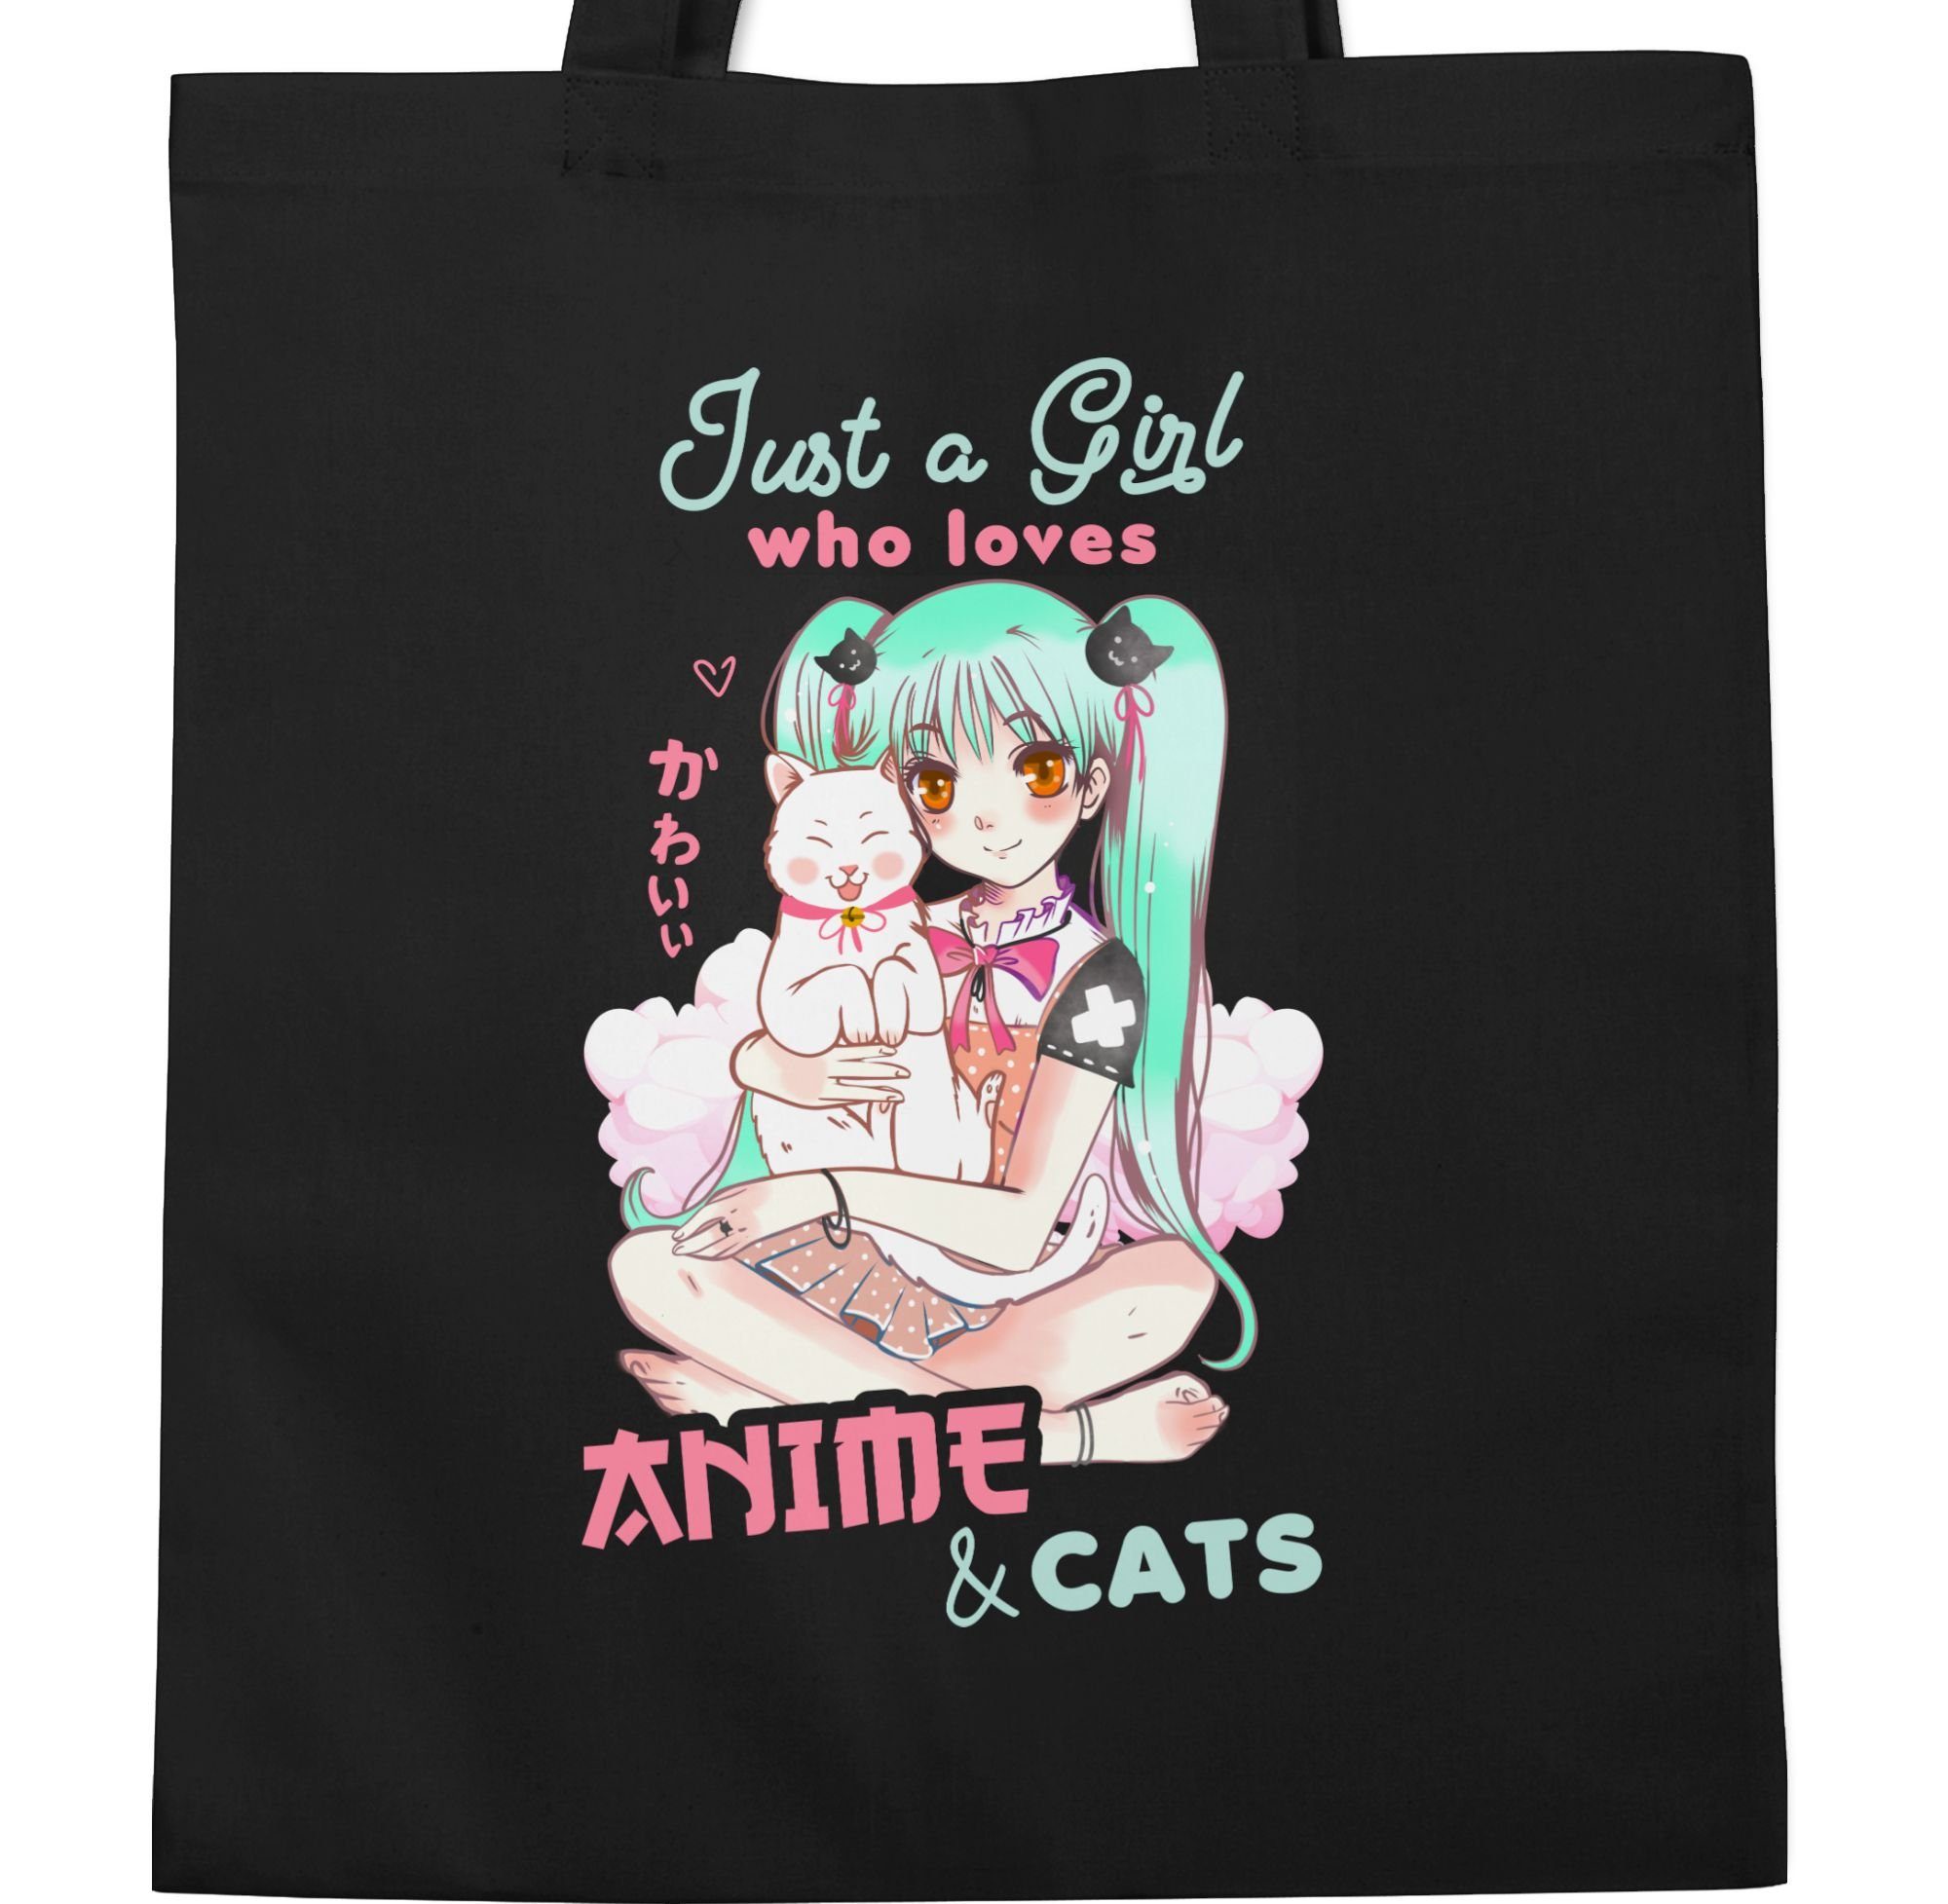 Anime Schwarz Geschenke Umhängetasche loves Shirtracer anime who & girl a 1 cats, Just